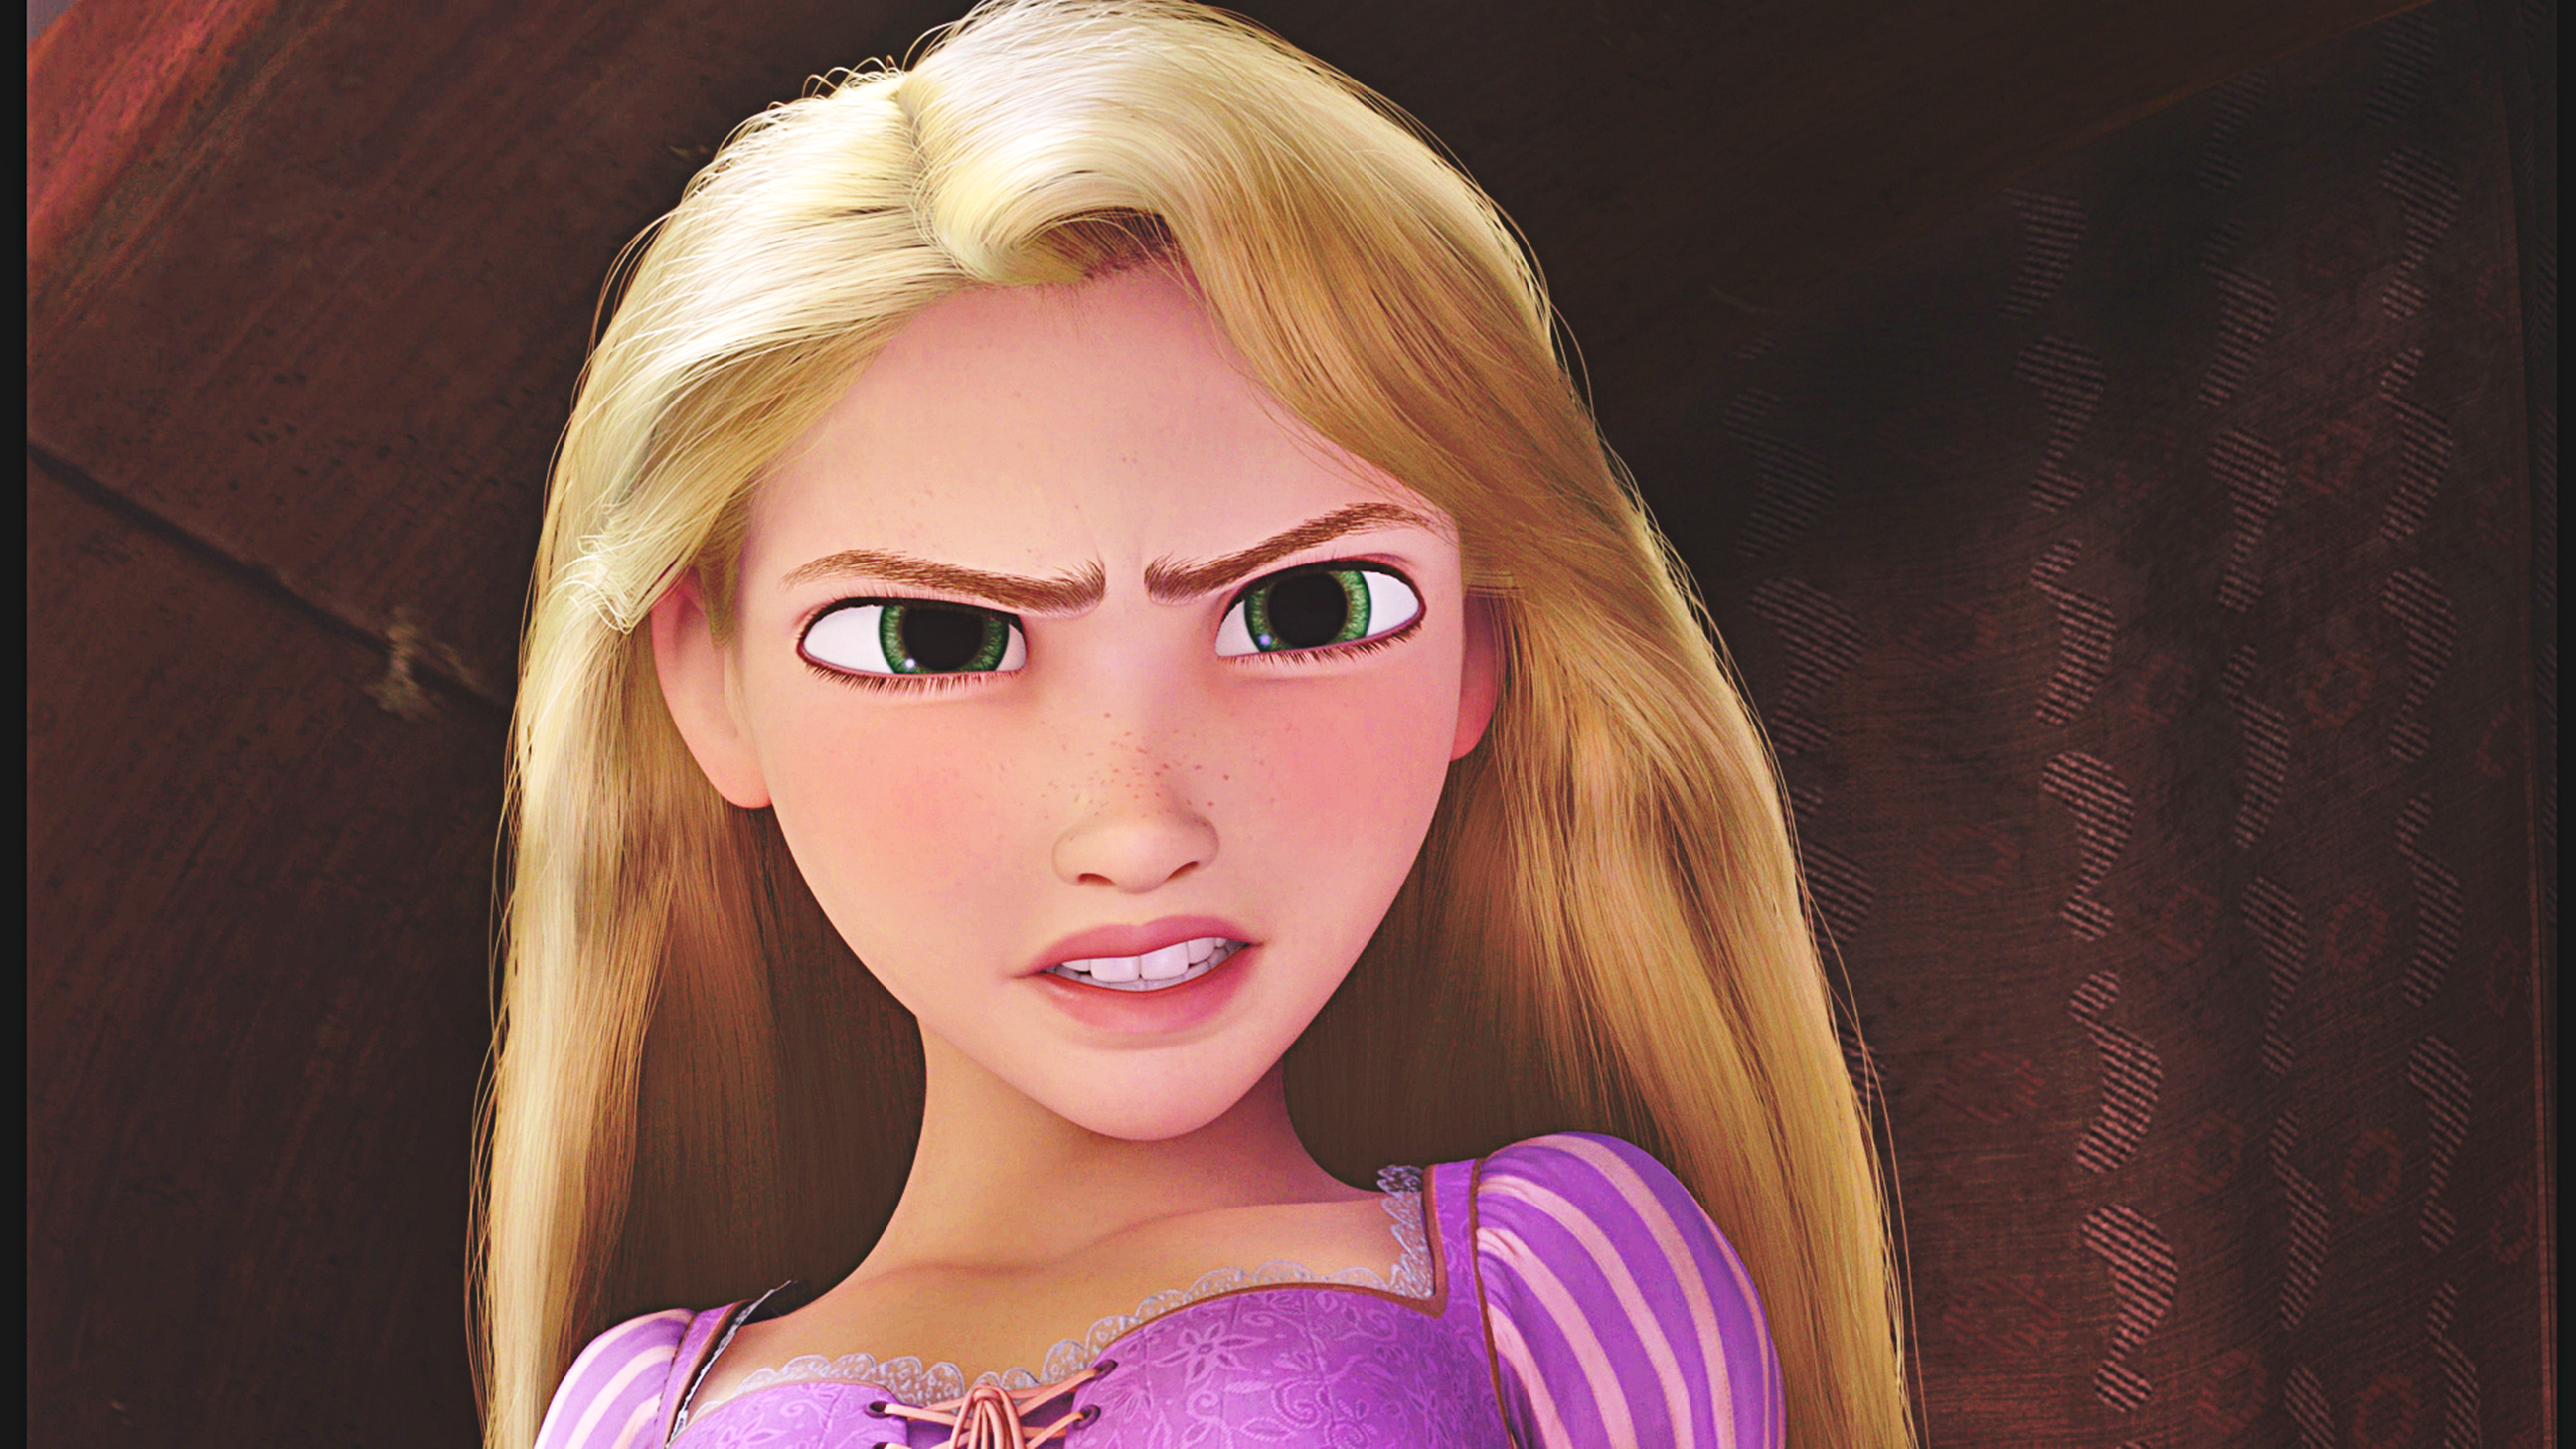 Walt Disney - Princess Rapunzel